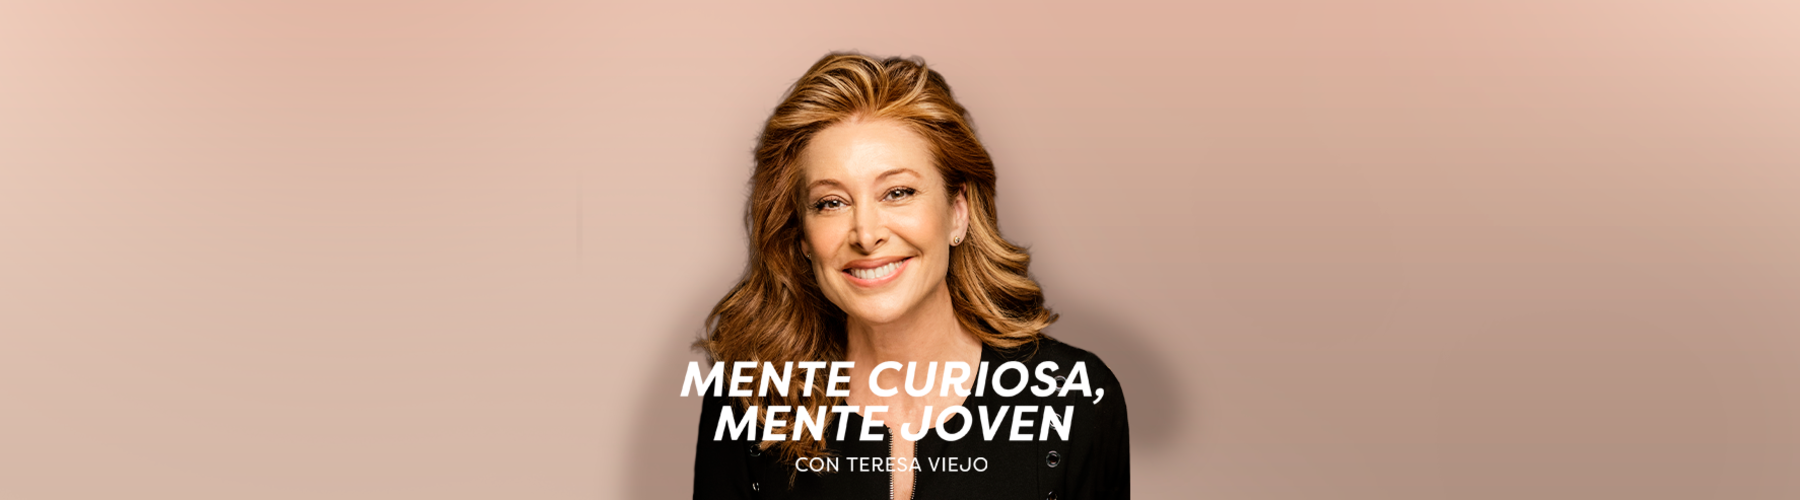 La prestigiosa periodista española, Teresa Viejo, estrena su podcast "Mente curiosa, mente joven"